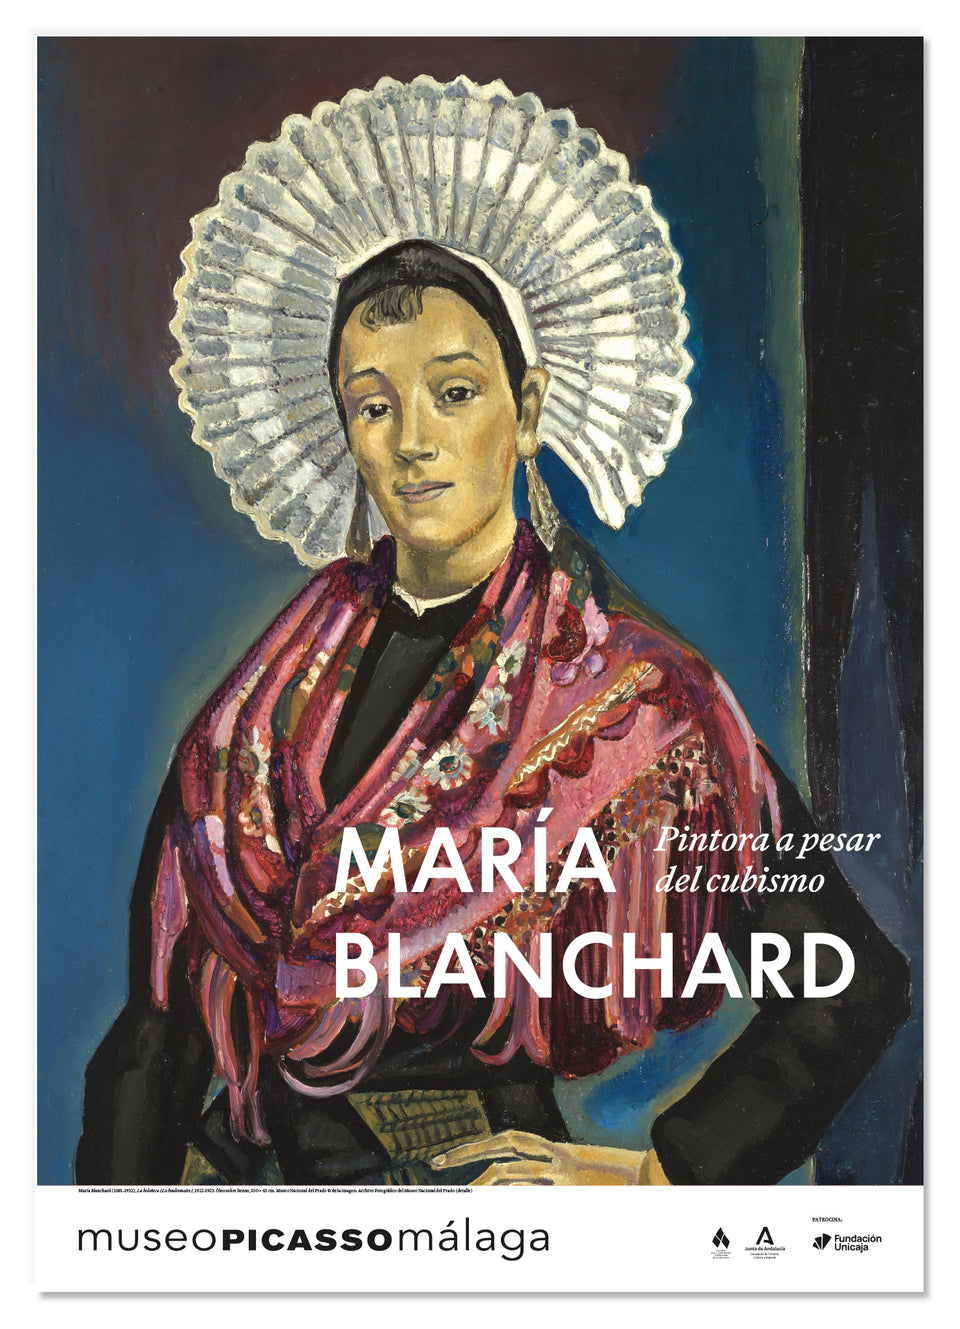 María Blanchard exhibition poster